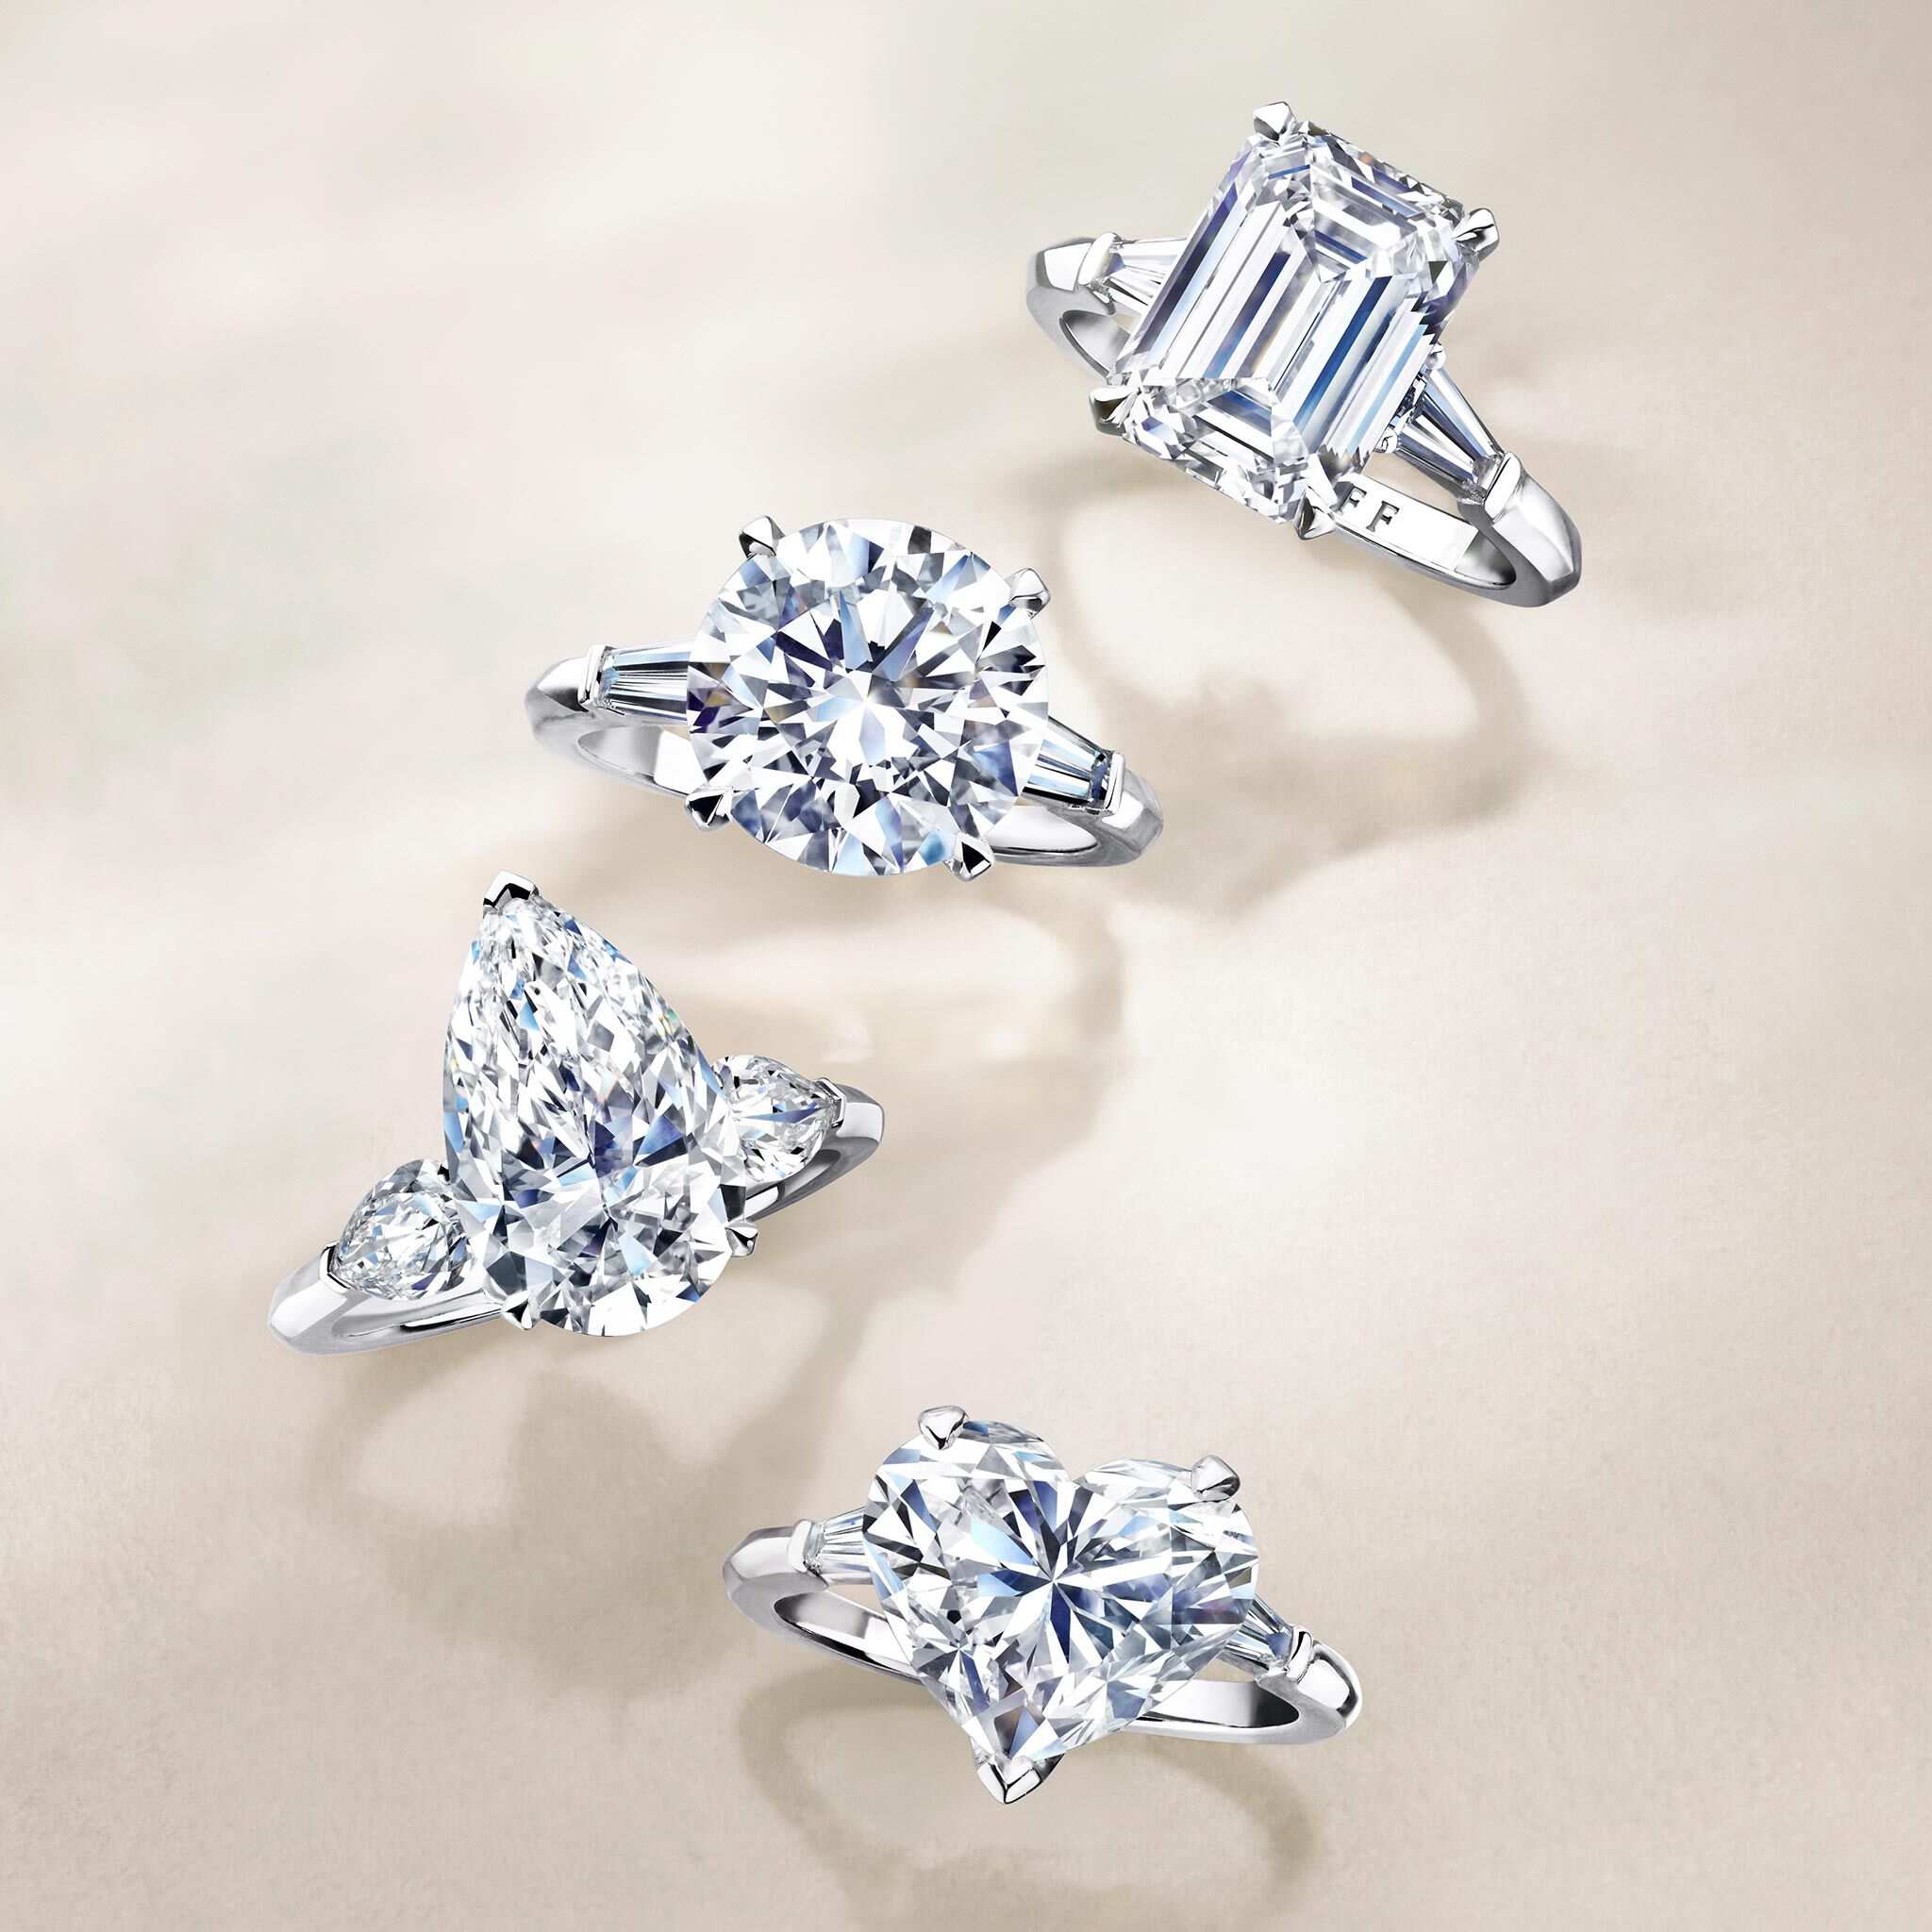 Three Graff promise engagement rings set with round diamond, pear Shape Diamond and Square Emerald Cut Diamond